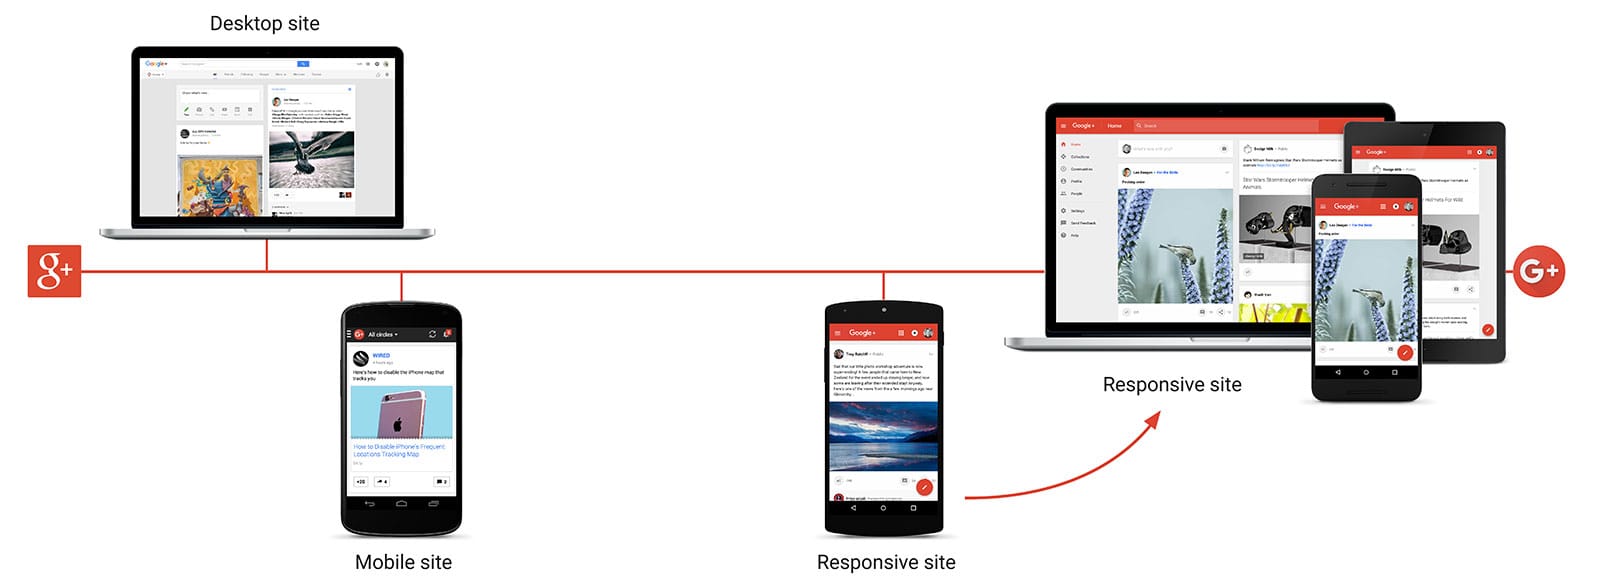 Evolution of Google+ site